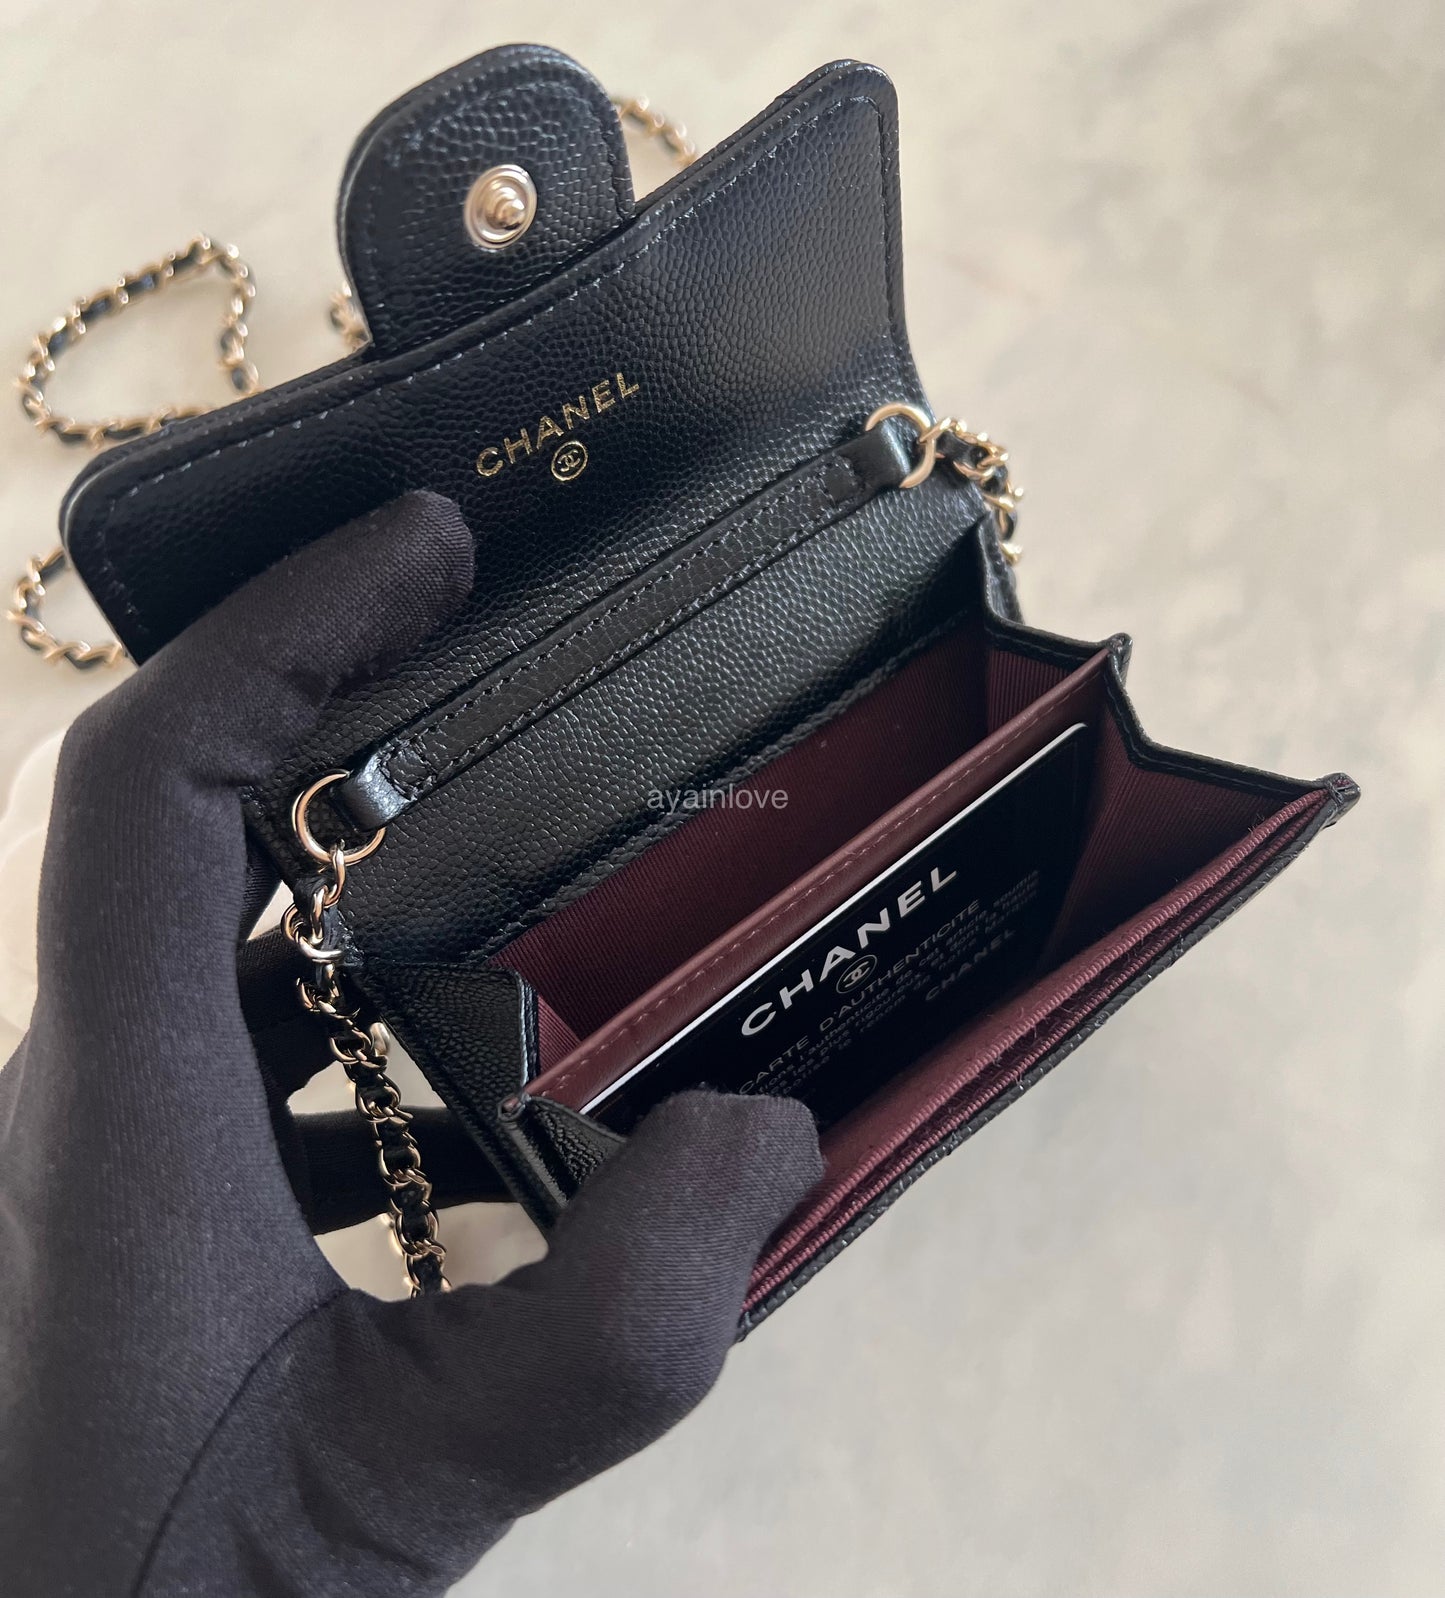 CHANEL Black Caviar XL Snap Card Holder on Chain Light Gold Hardware